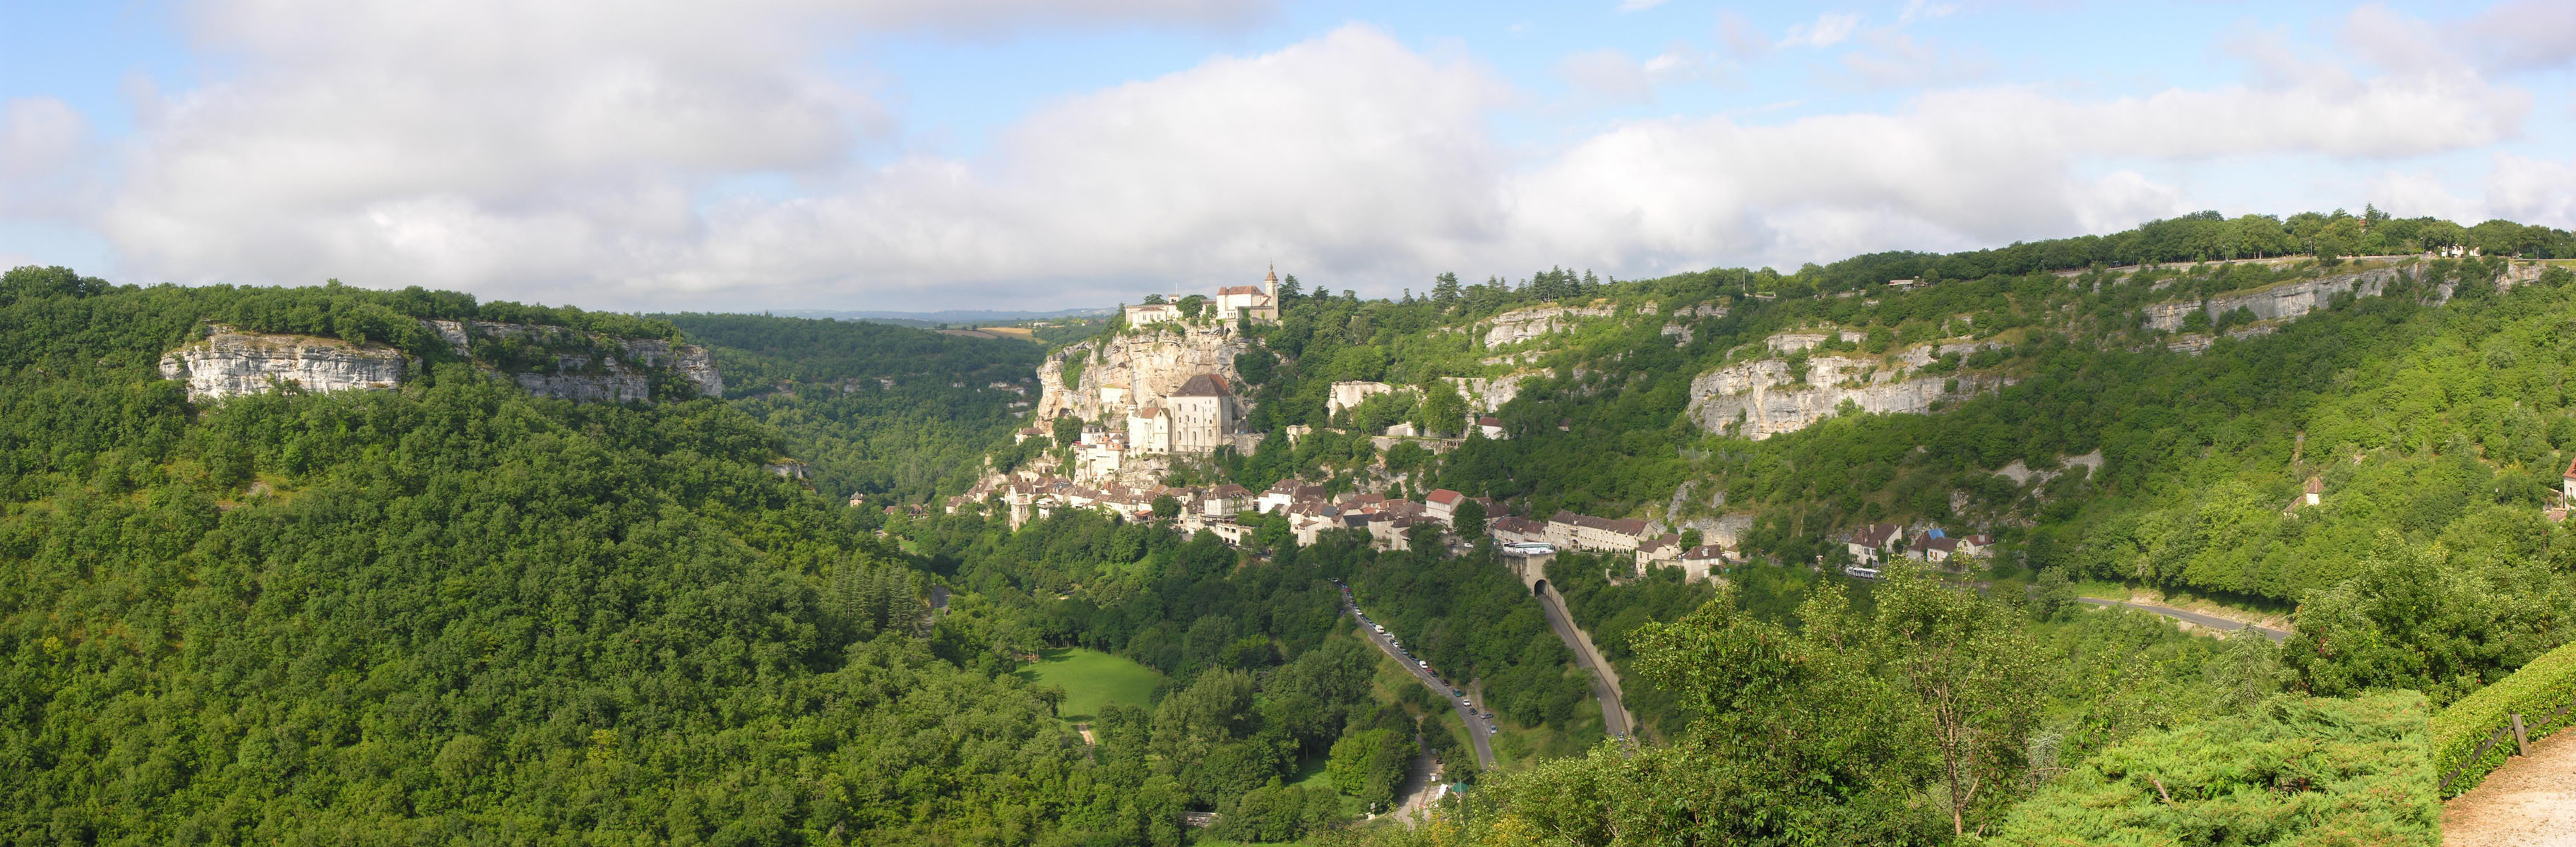 Rocamadour - France2.jpg